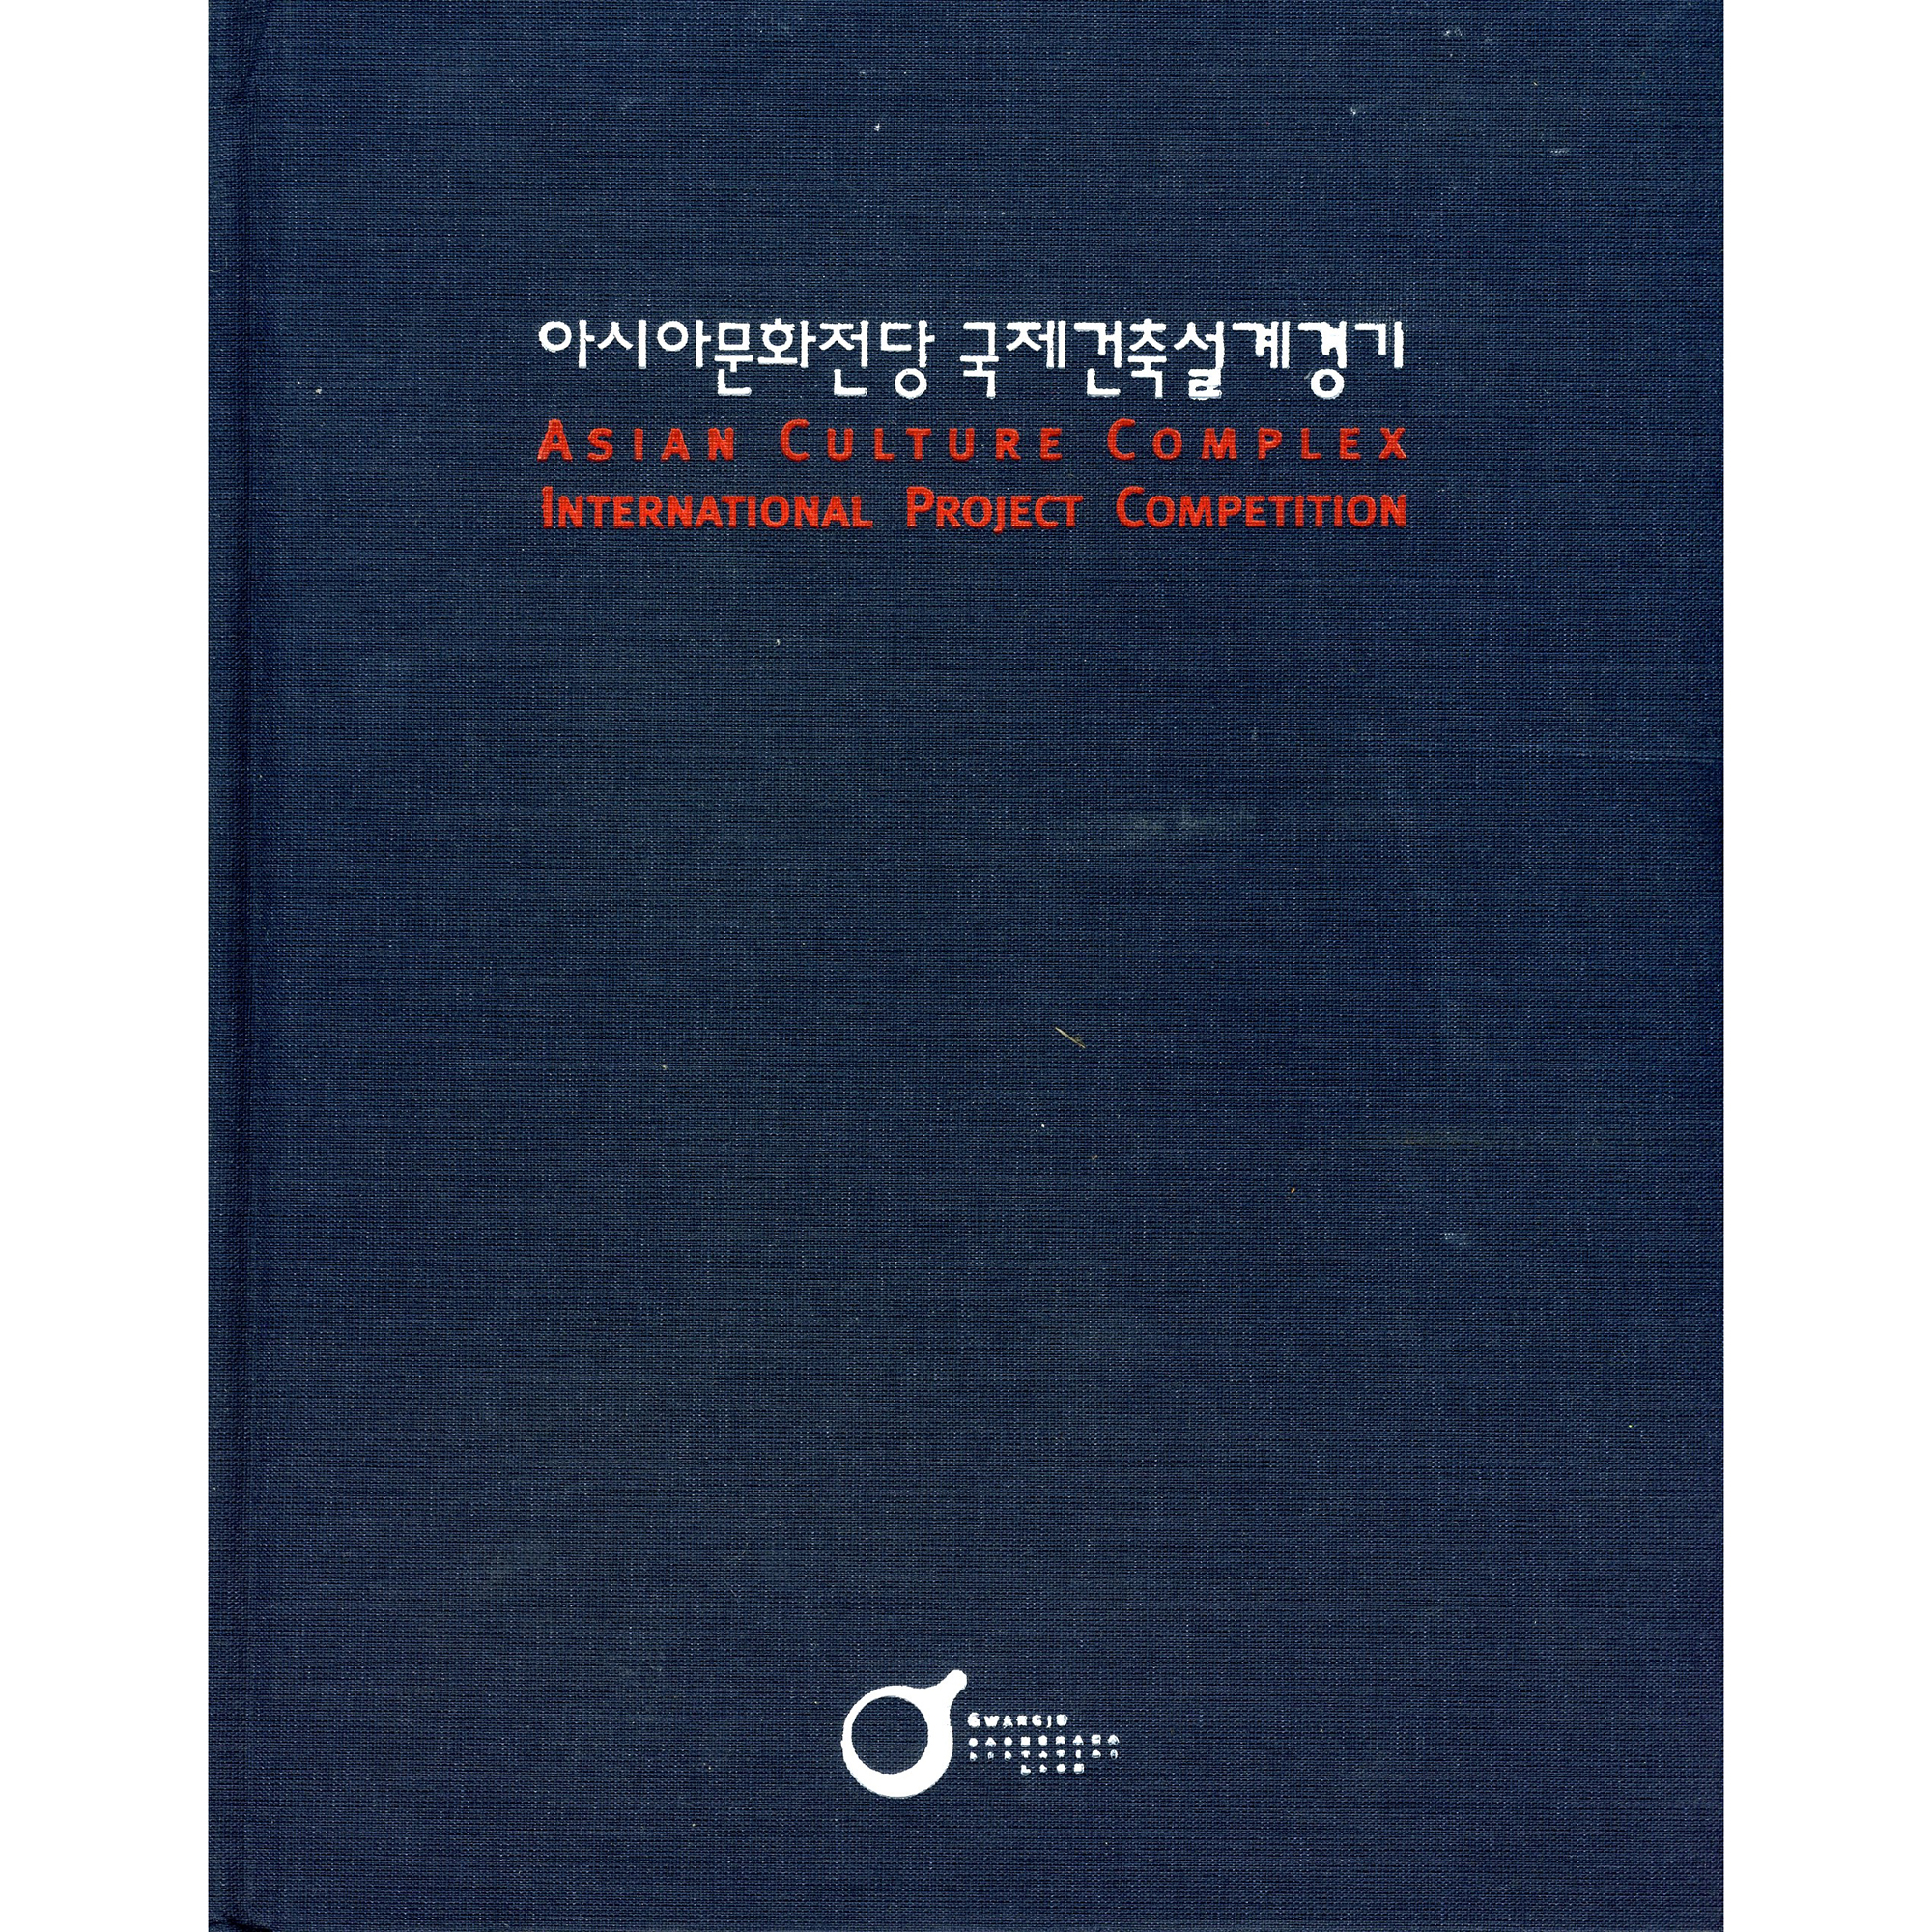 Asian Culture Complex. 2006 (Printed Publication)